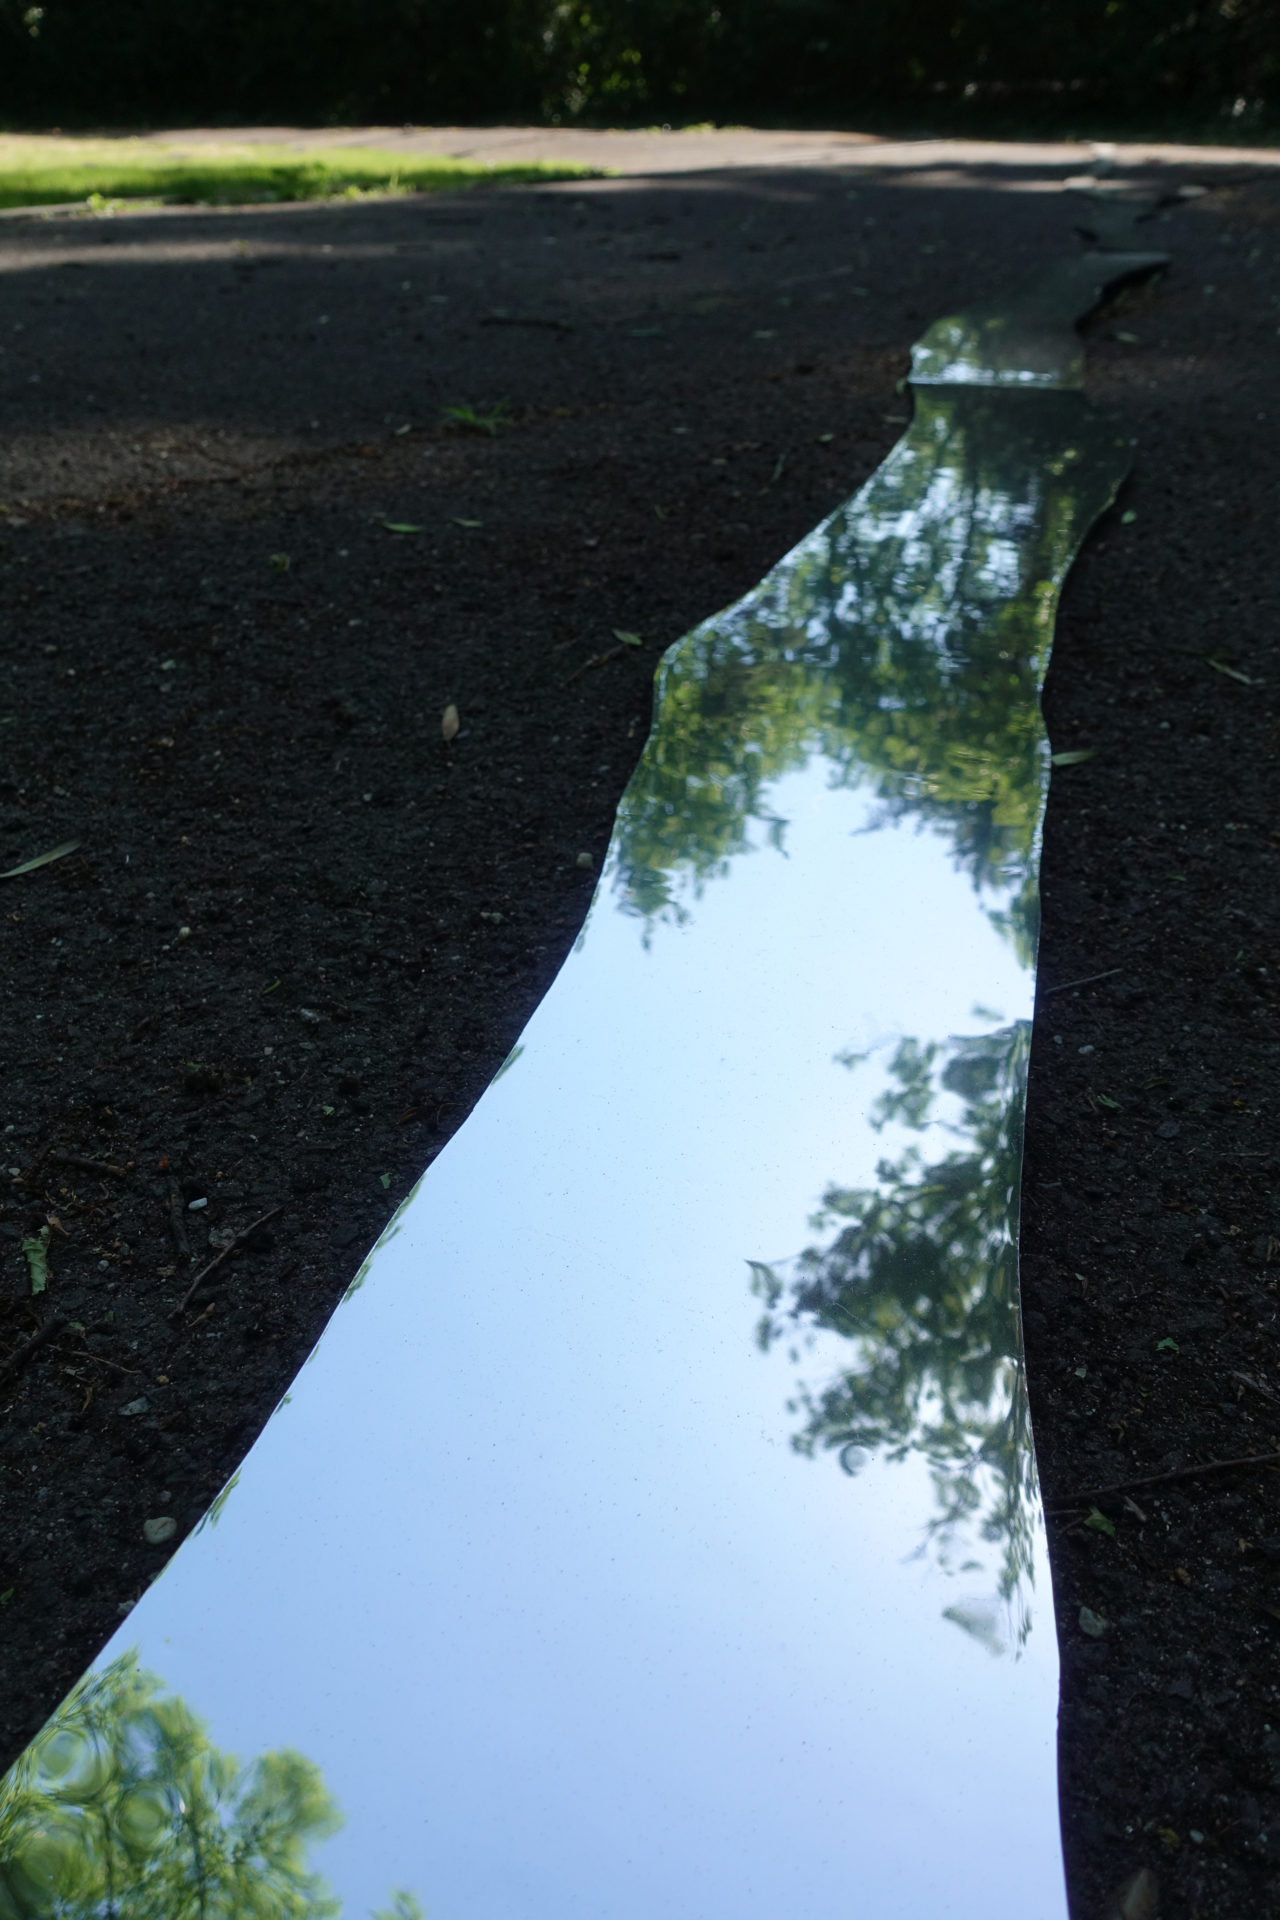 Timisoara - detail of a mirror shadow on May 23, 2022 at 9:45